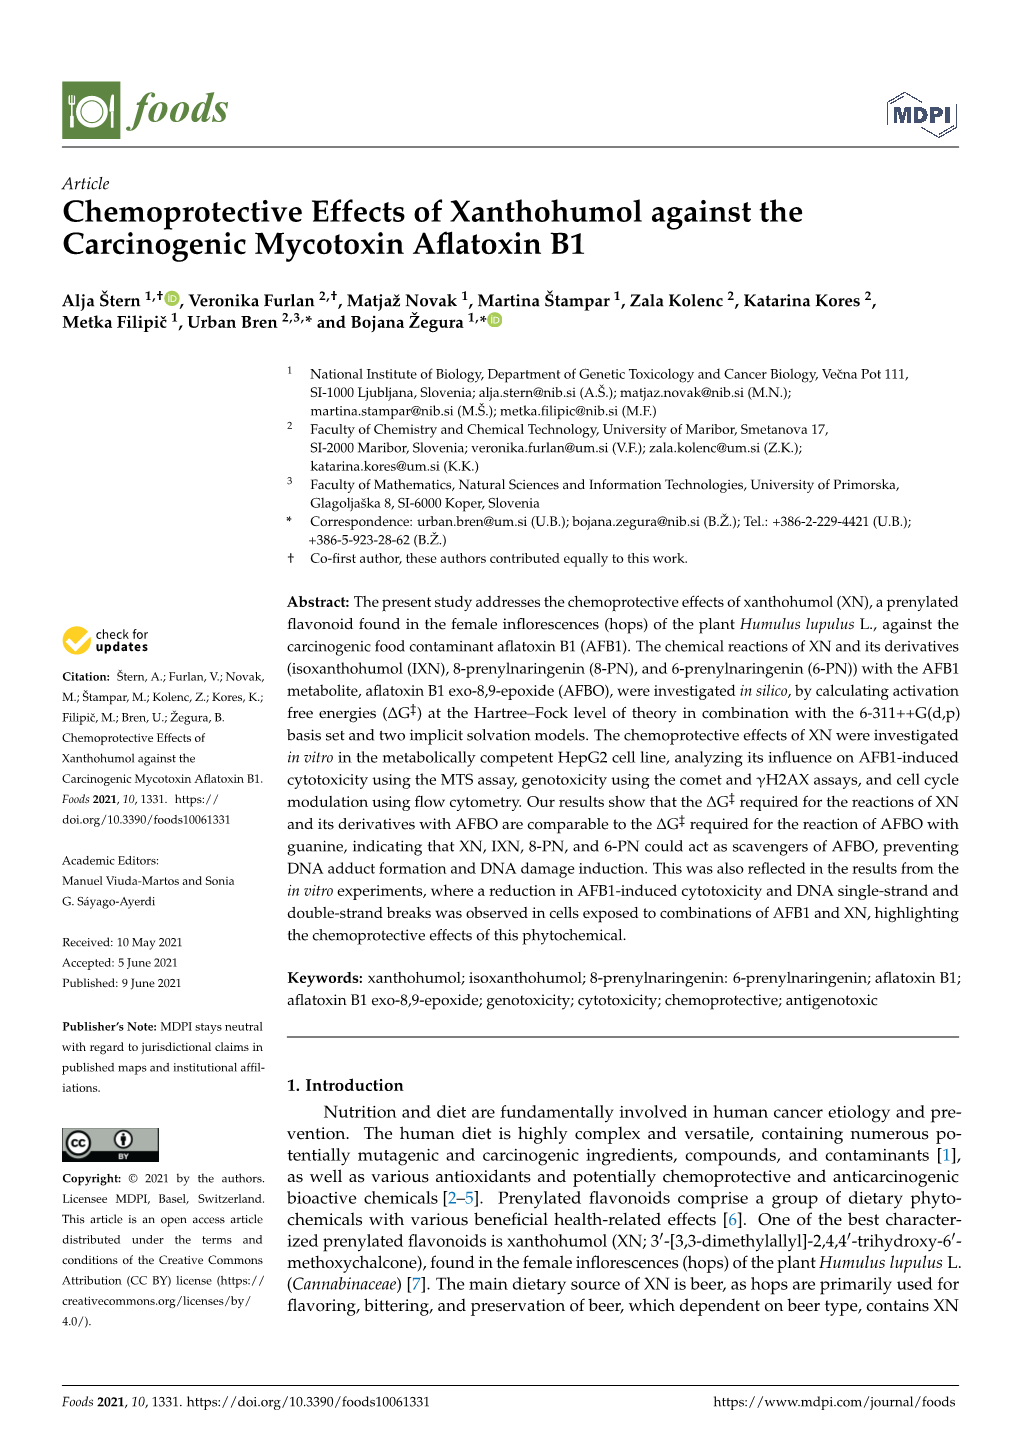 Chemoprotective Effects of Xanthohumol Against the Carcinogenic Mycotoxin Aﬂatoxin B1